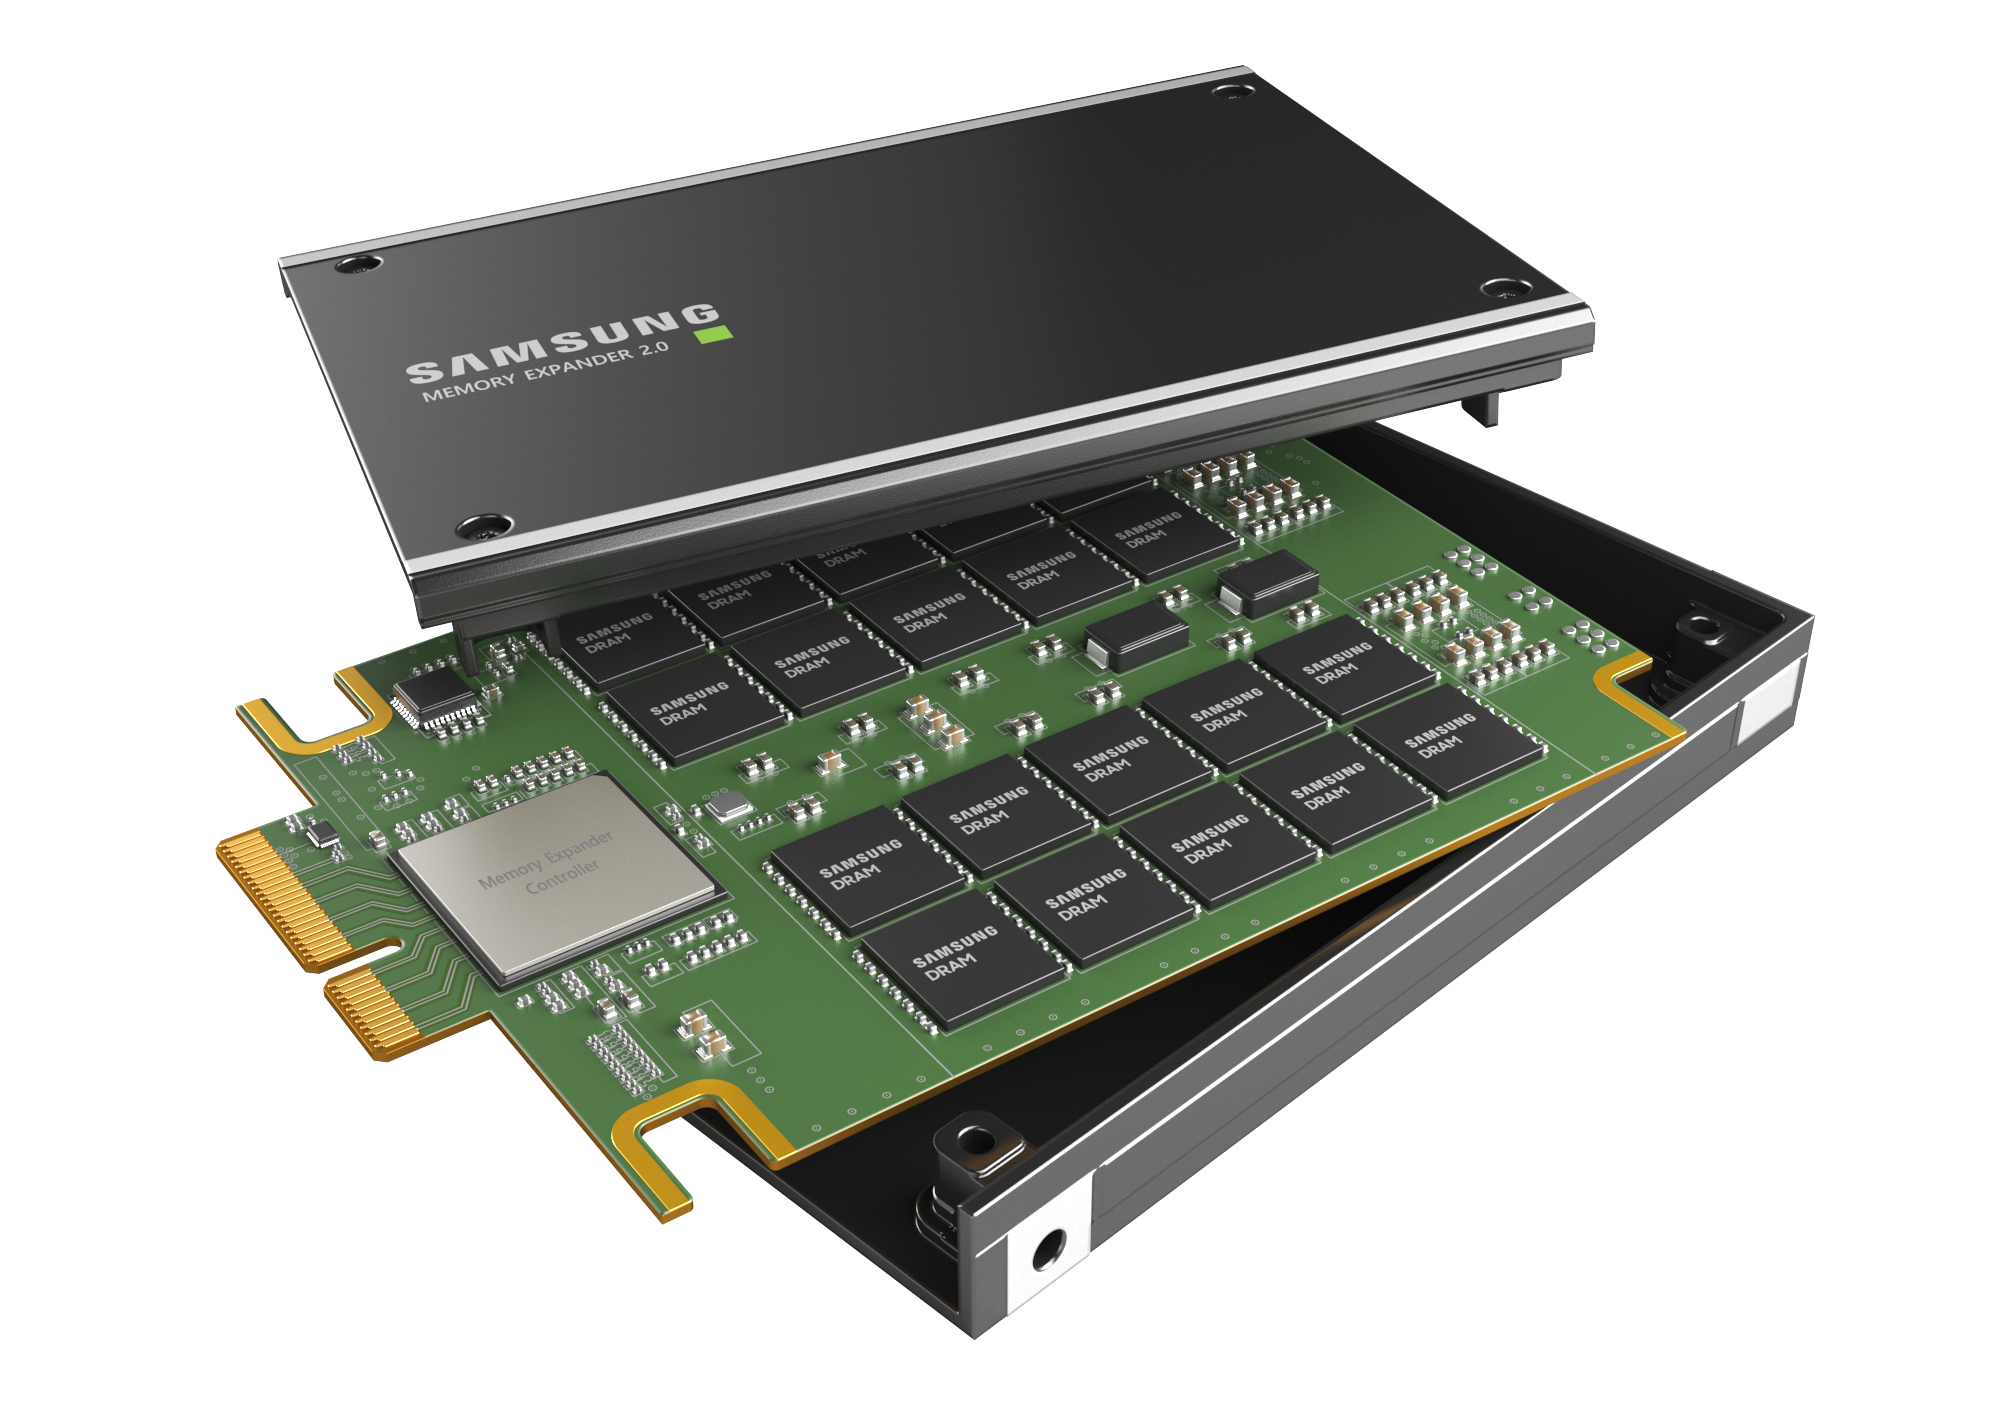 Samsung Memory Expander 2.0 using Samsung DRAM chips